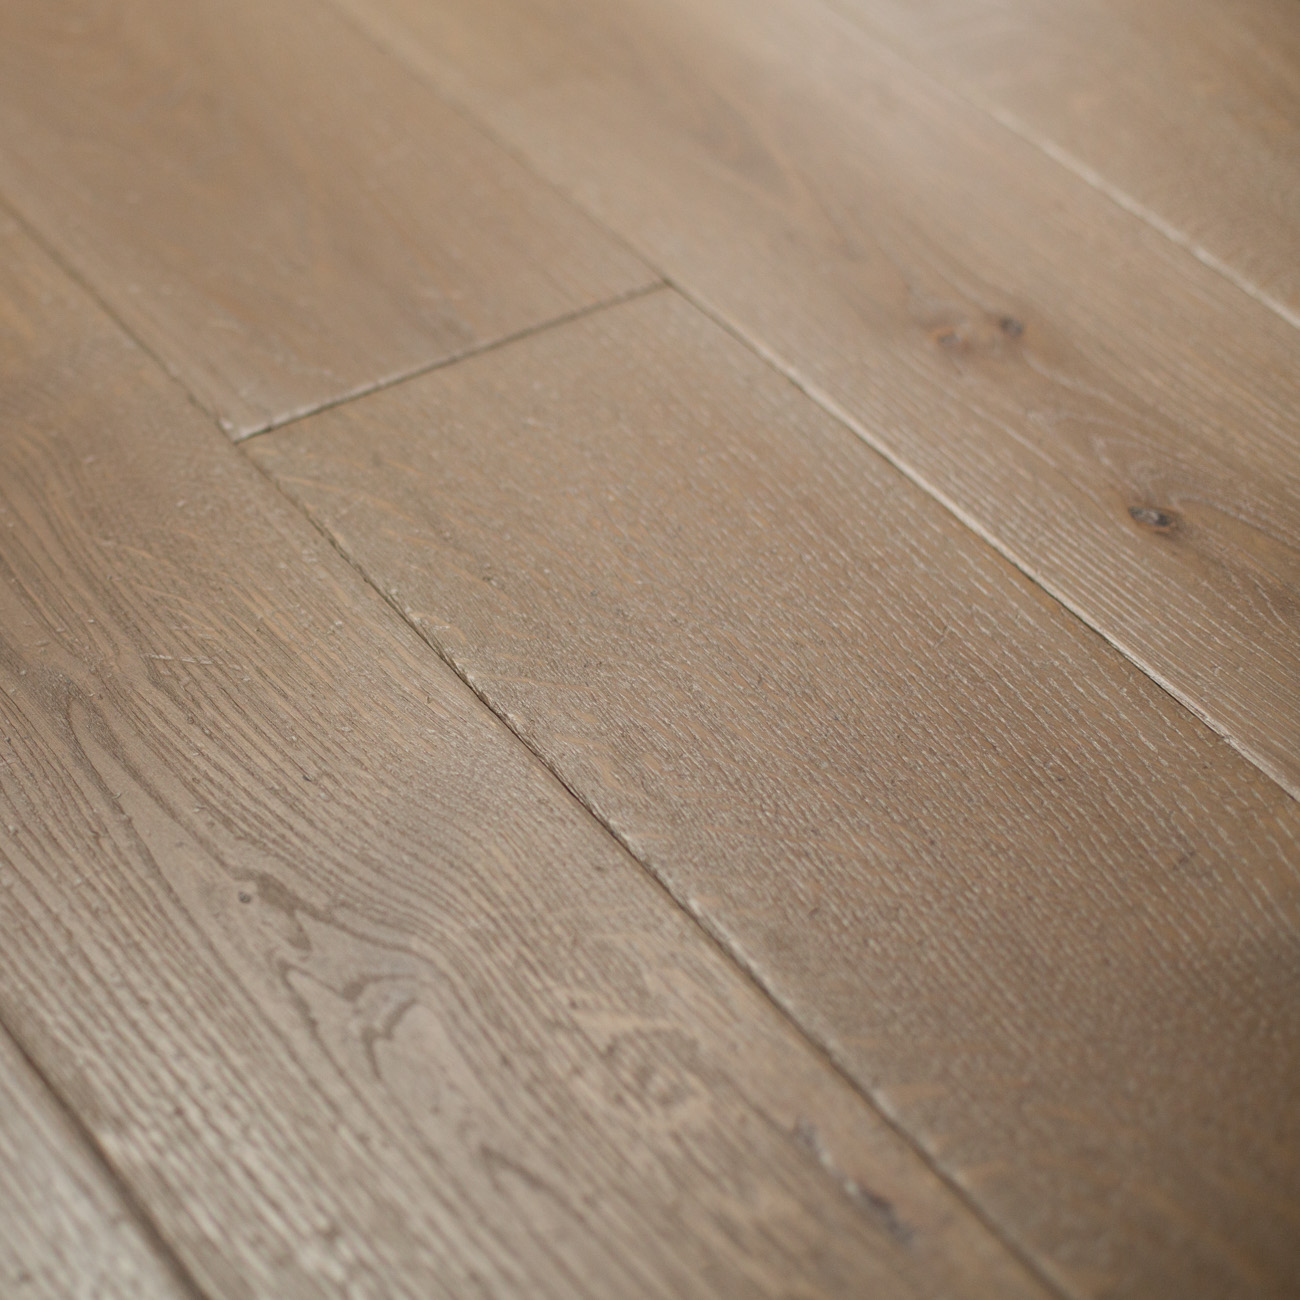 Oak wood floors